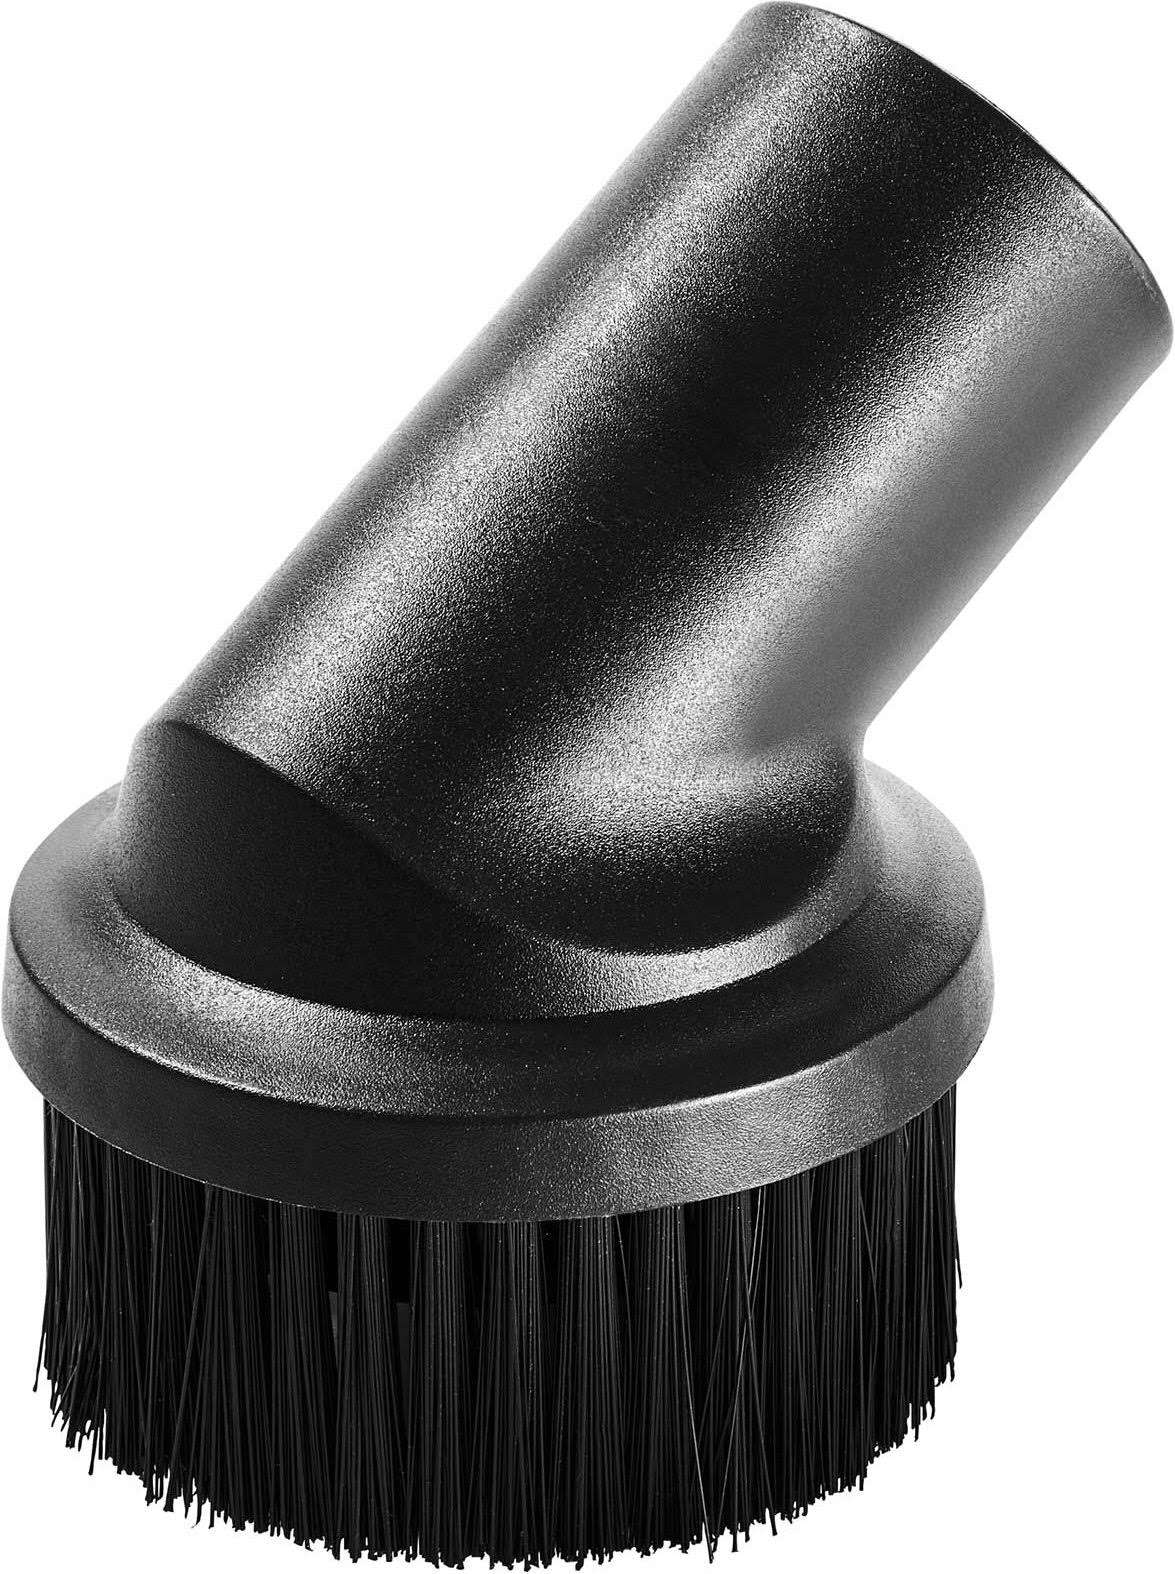 Festool Suction Brush - 70mm